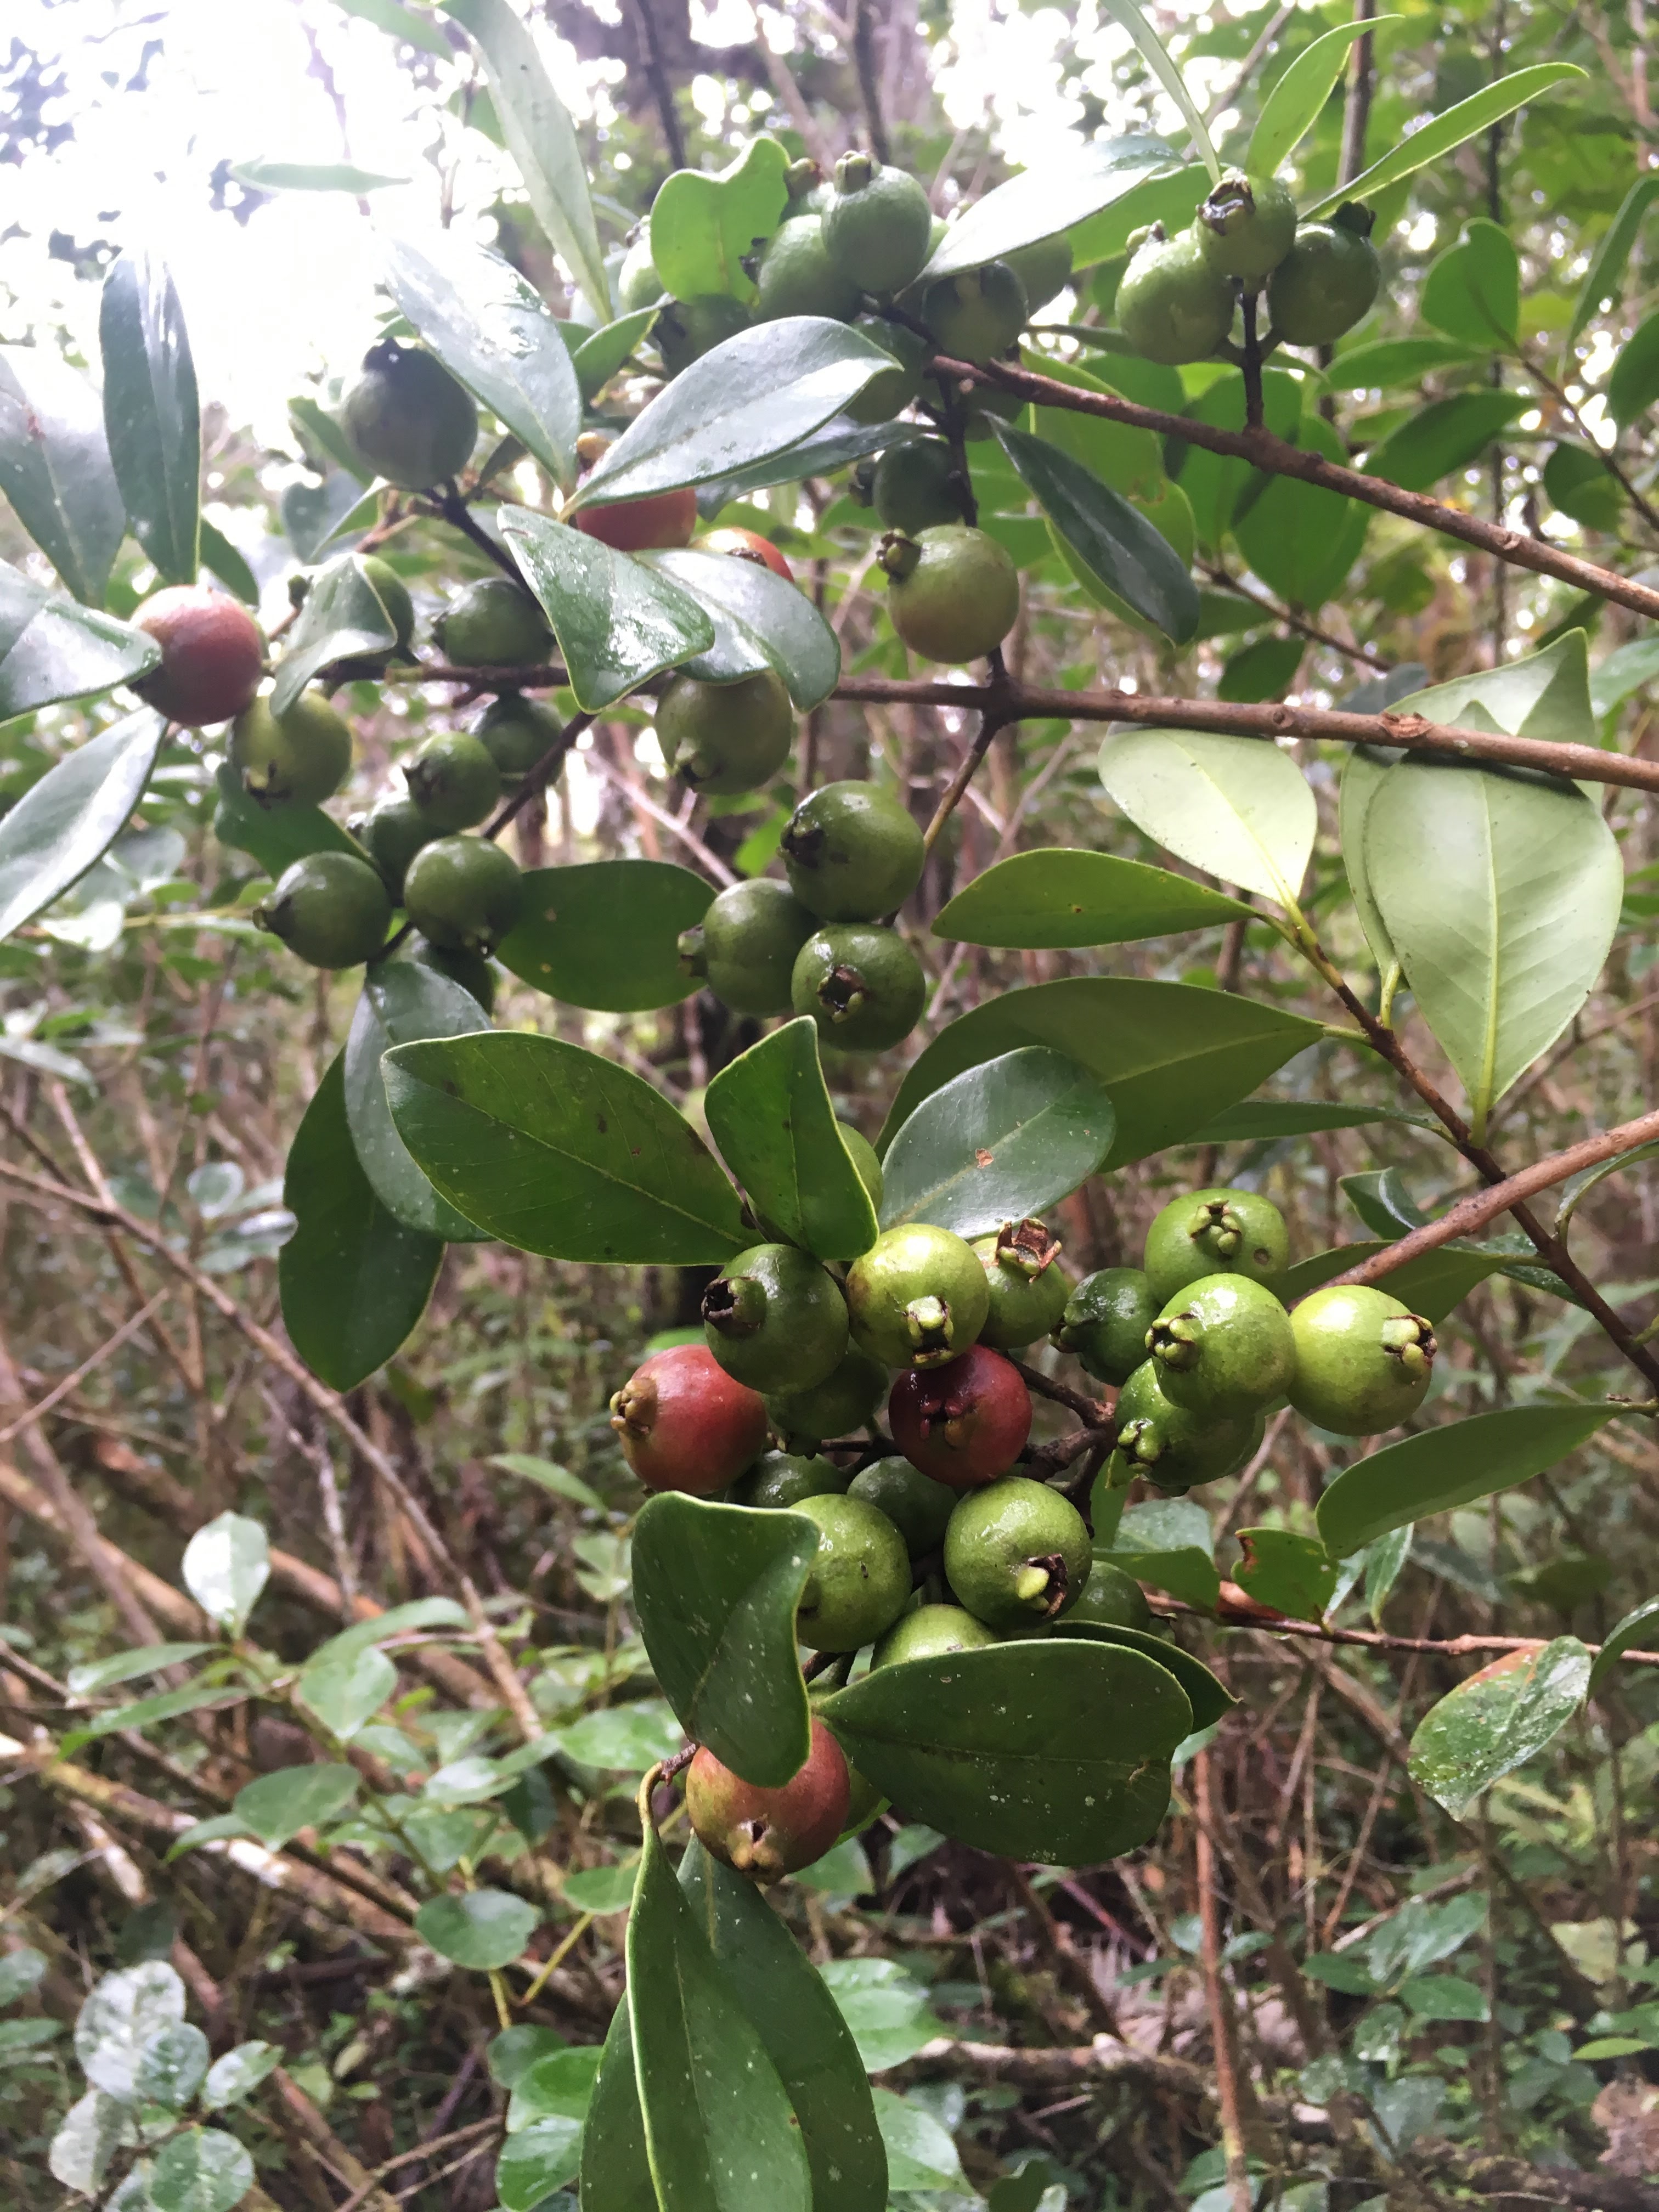 Invasive guava in Ranomafana